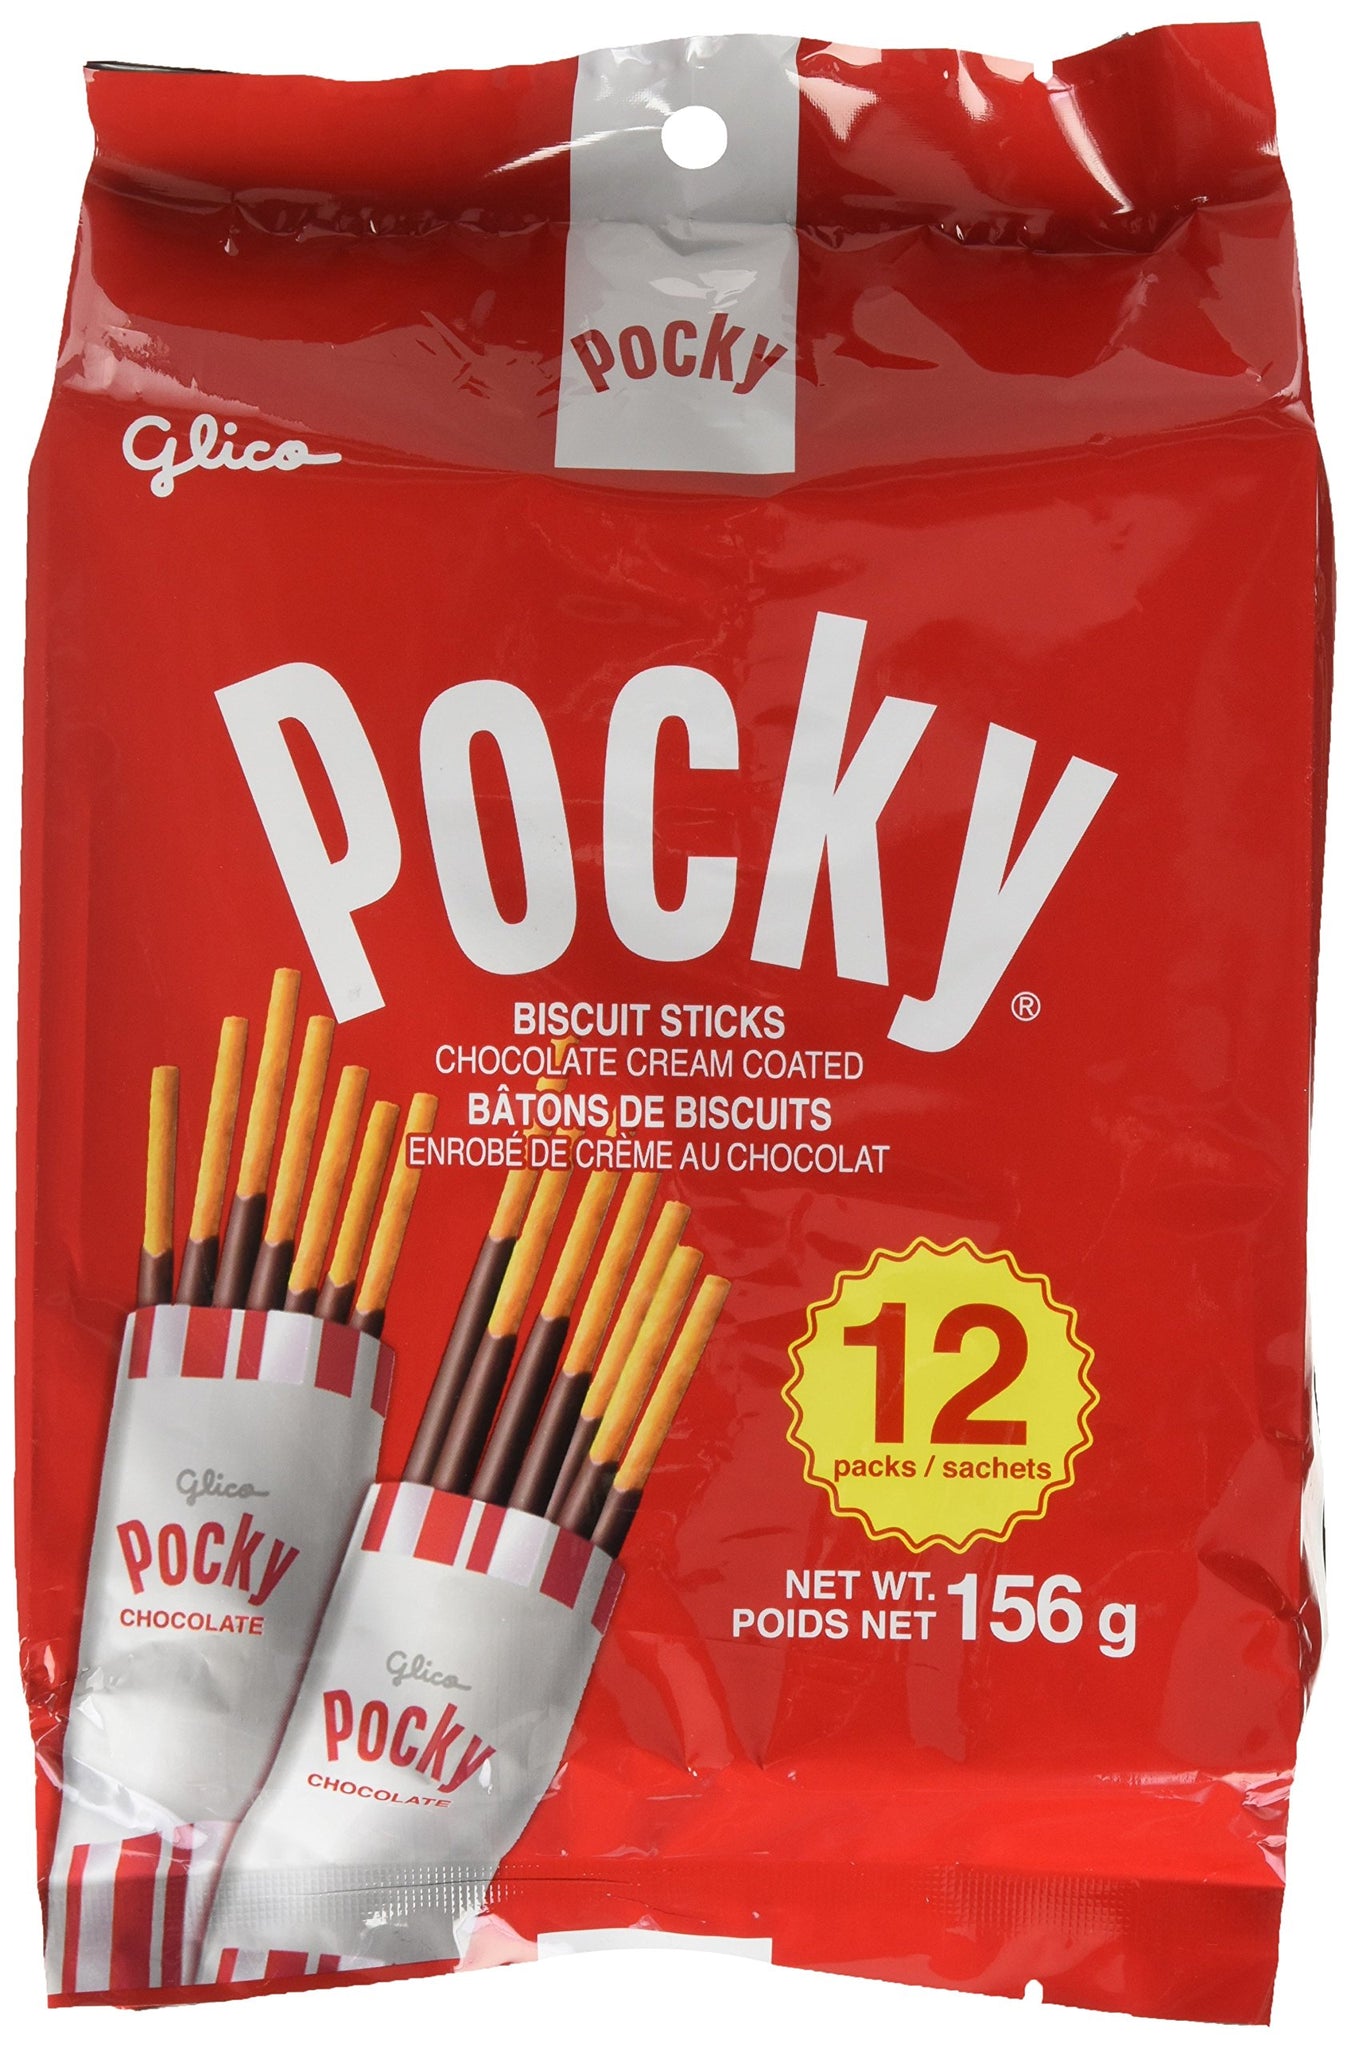 Pocky Chocolate Cream Coated Biscuit Sticks 12 Packs 156 g